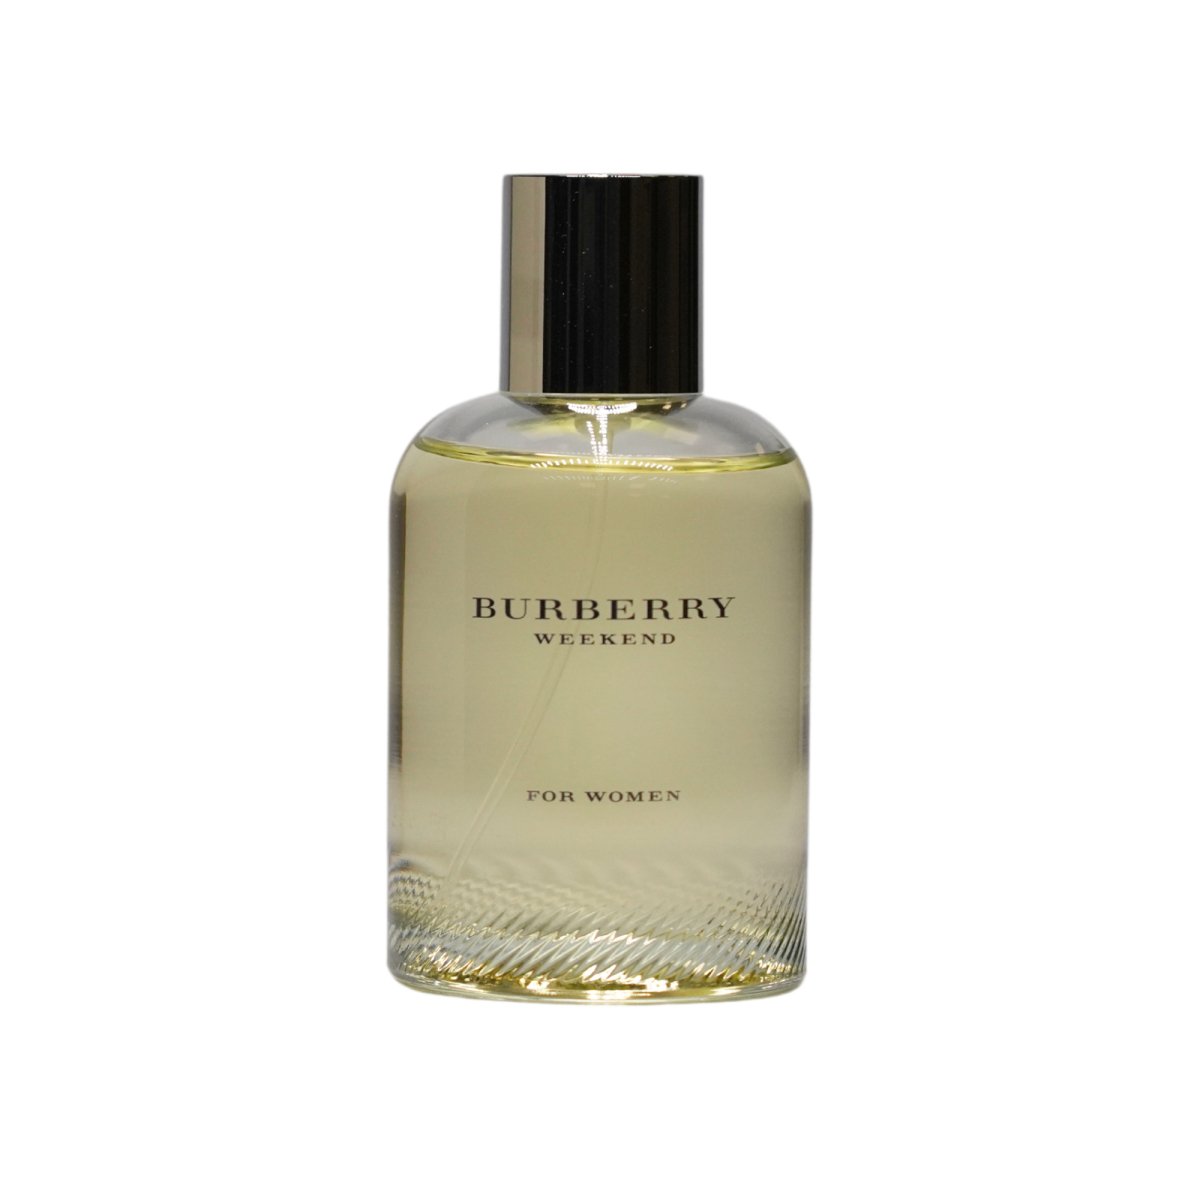 Burberry Weekend 3.4oz Eau De Parfum Spray Women - Burberry - 3.3 oz - Eau de Parfum - Fragrance - 3614226905284 - Fragrance